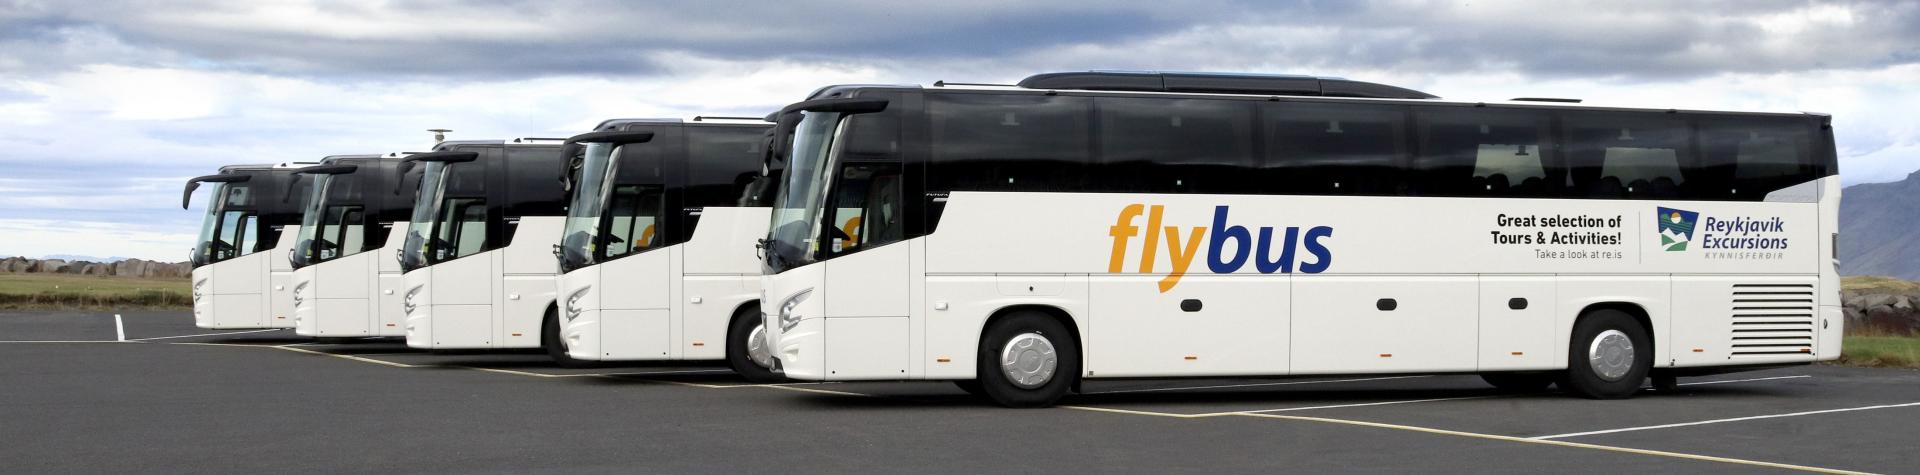 Flybus - Flexible return ticket